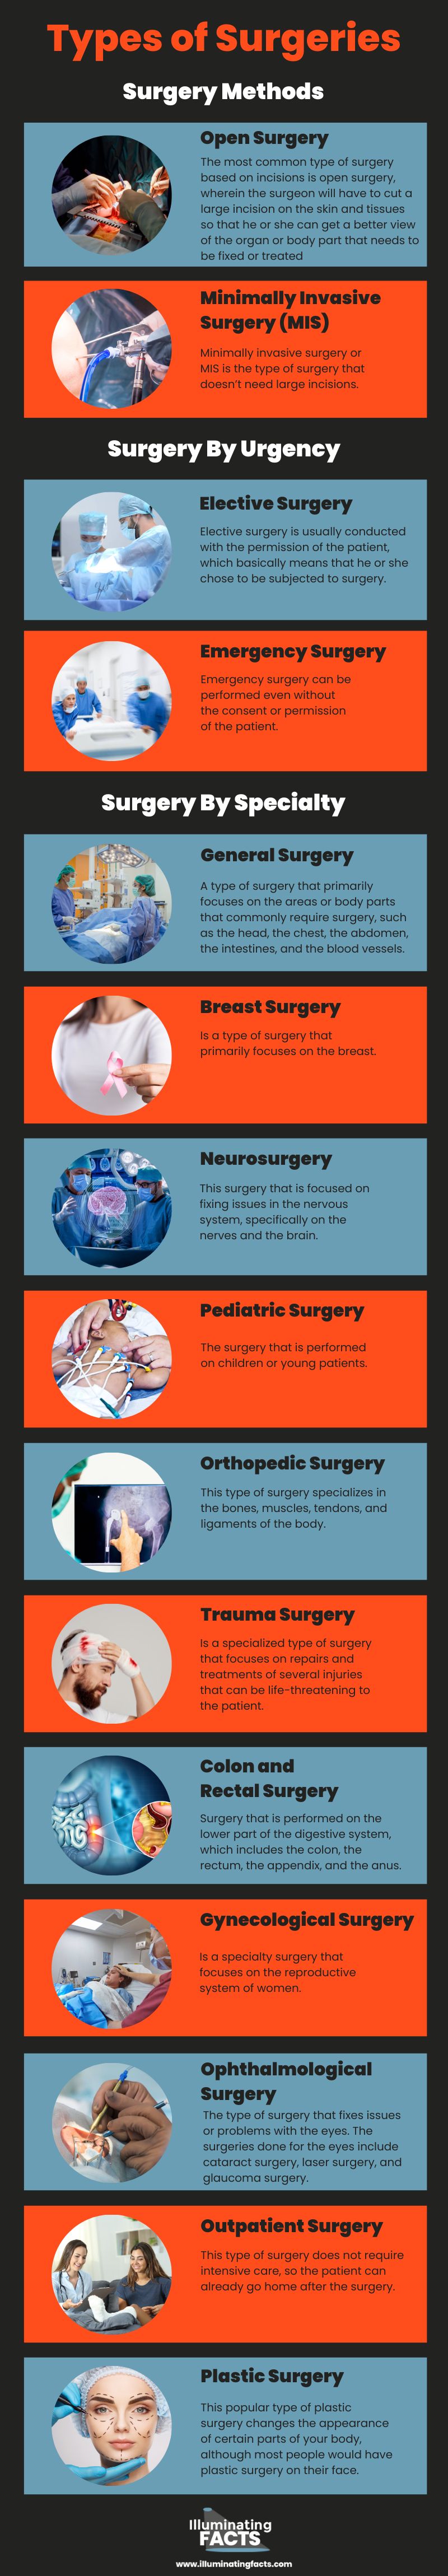 Types of Surgeries